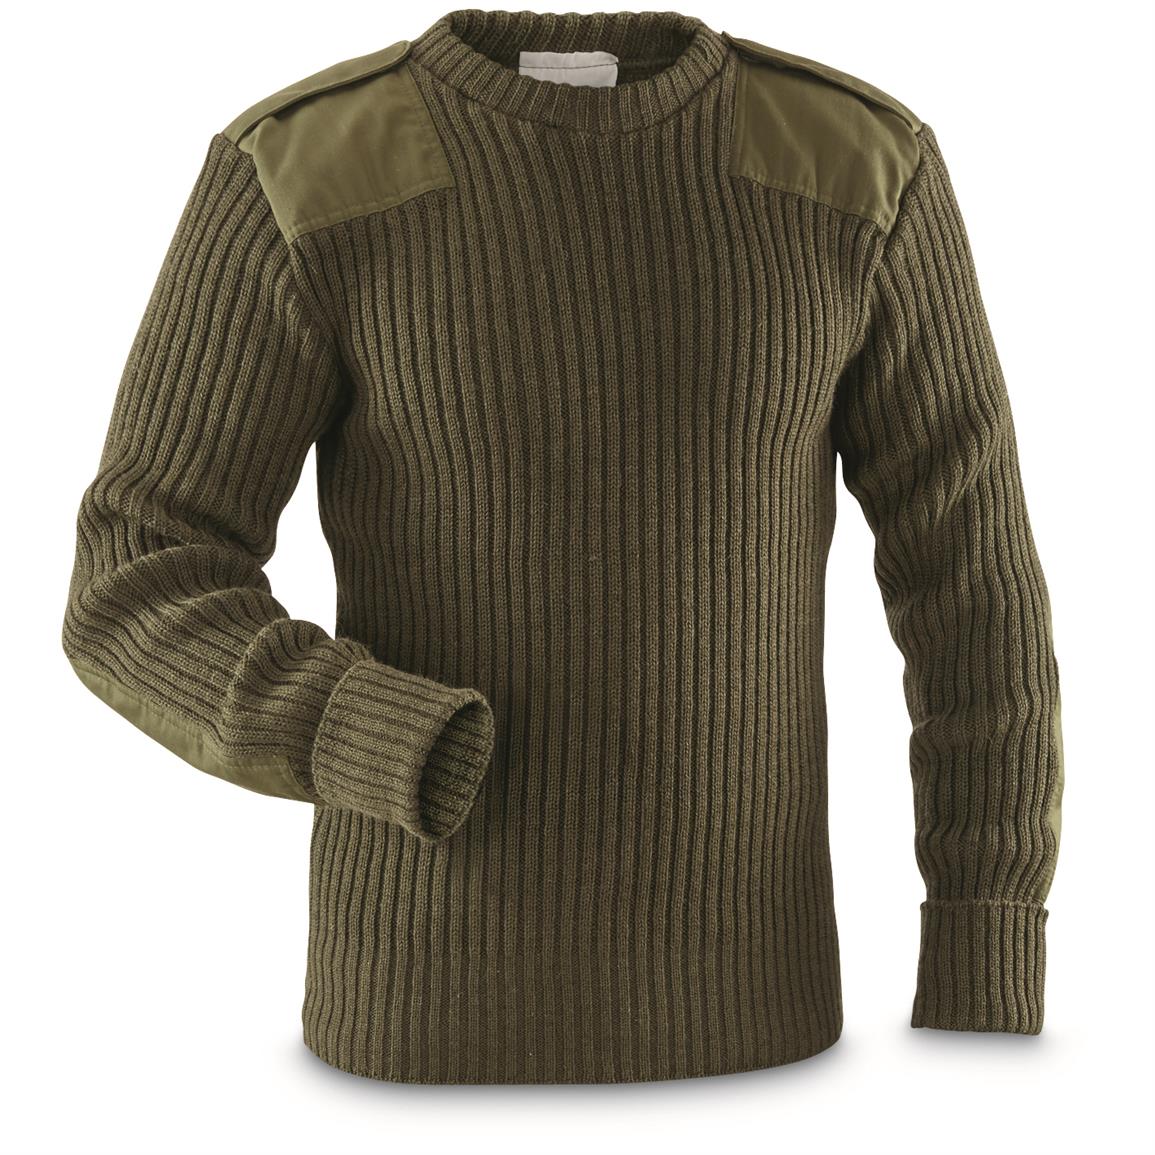 British Military Surplus Commando Wool Sweater, Olive Drab, Used ...